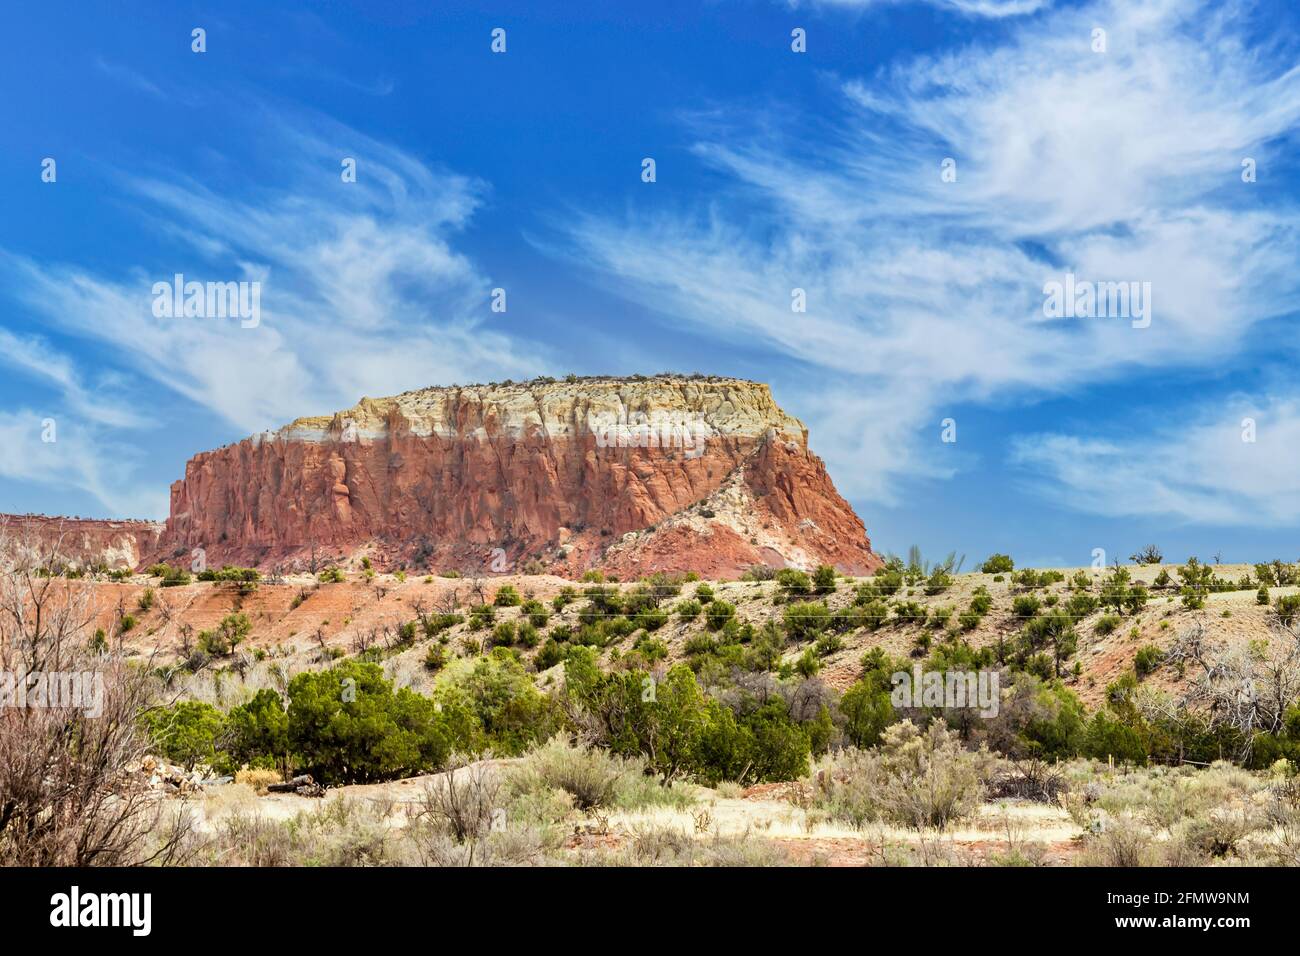 Sandstone Mesa Formation at Abiquiu, New Mexico., USA. Stock Photo